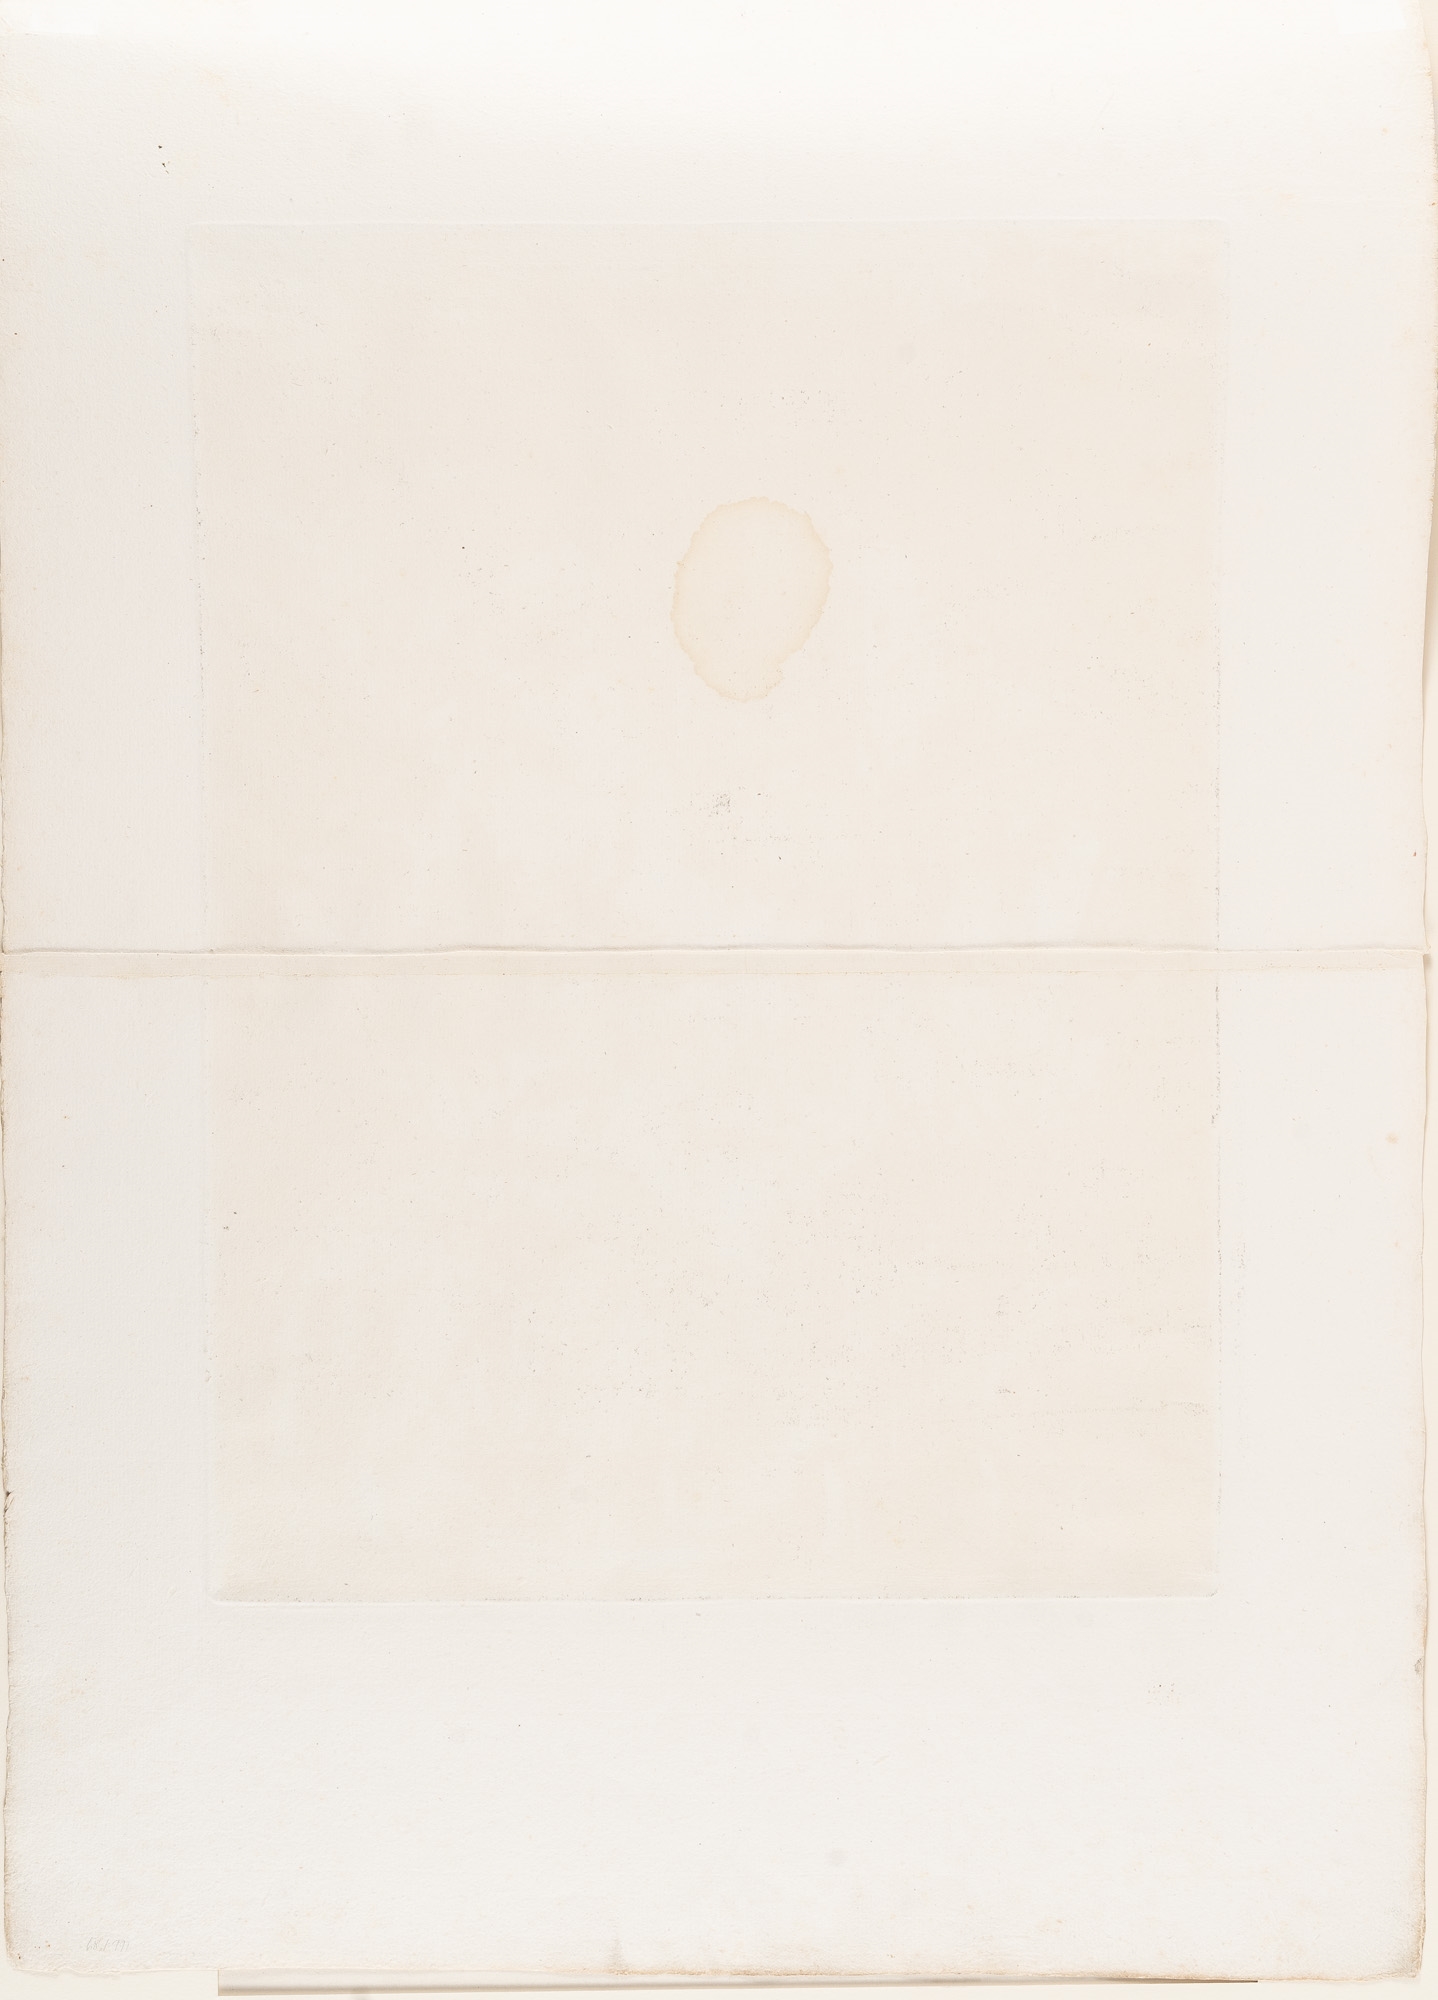 Artwork by Giovanni Battista Piranesi, Complete set of 16 sheets: Carceri d’Invenzione, Made of Engraving